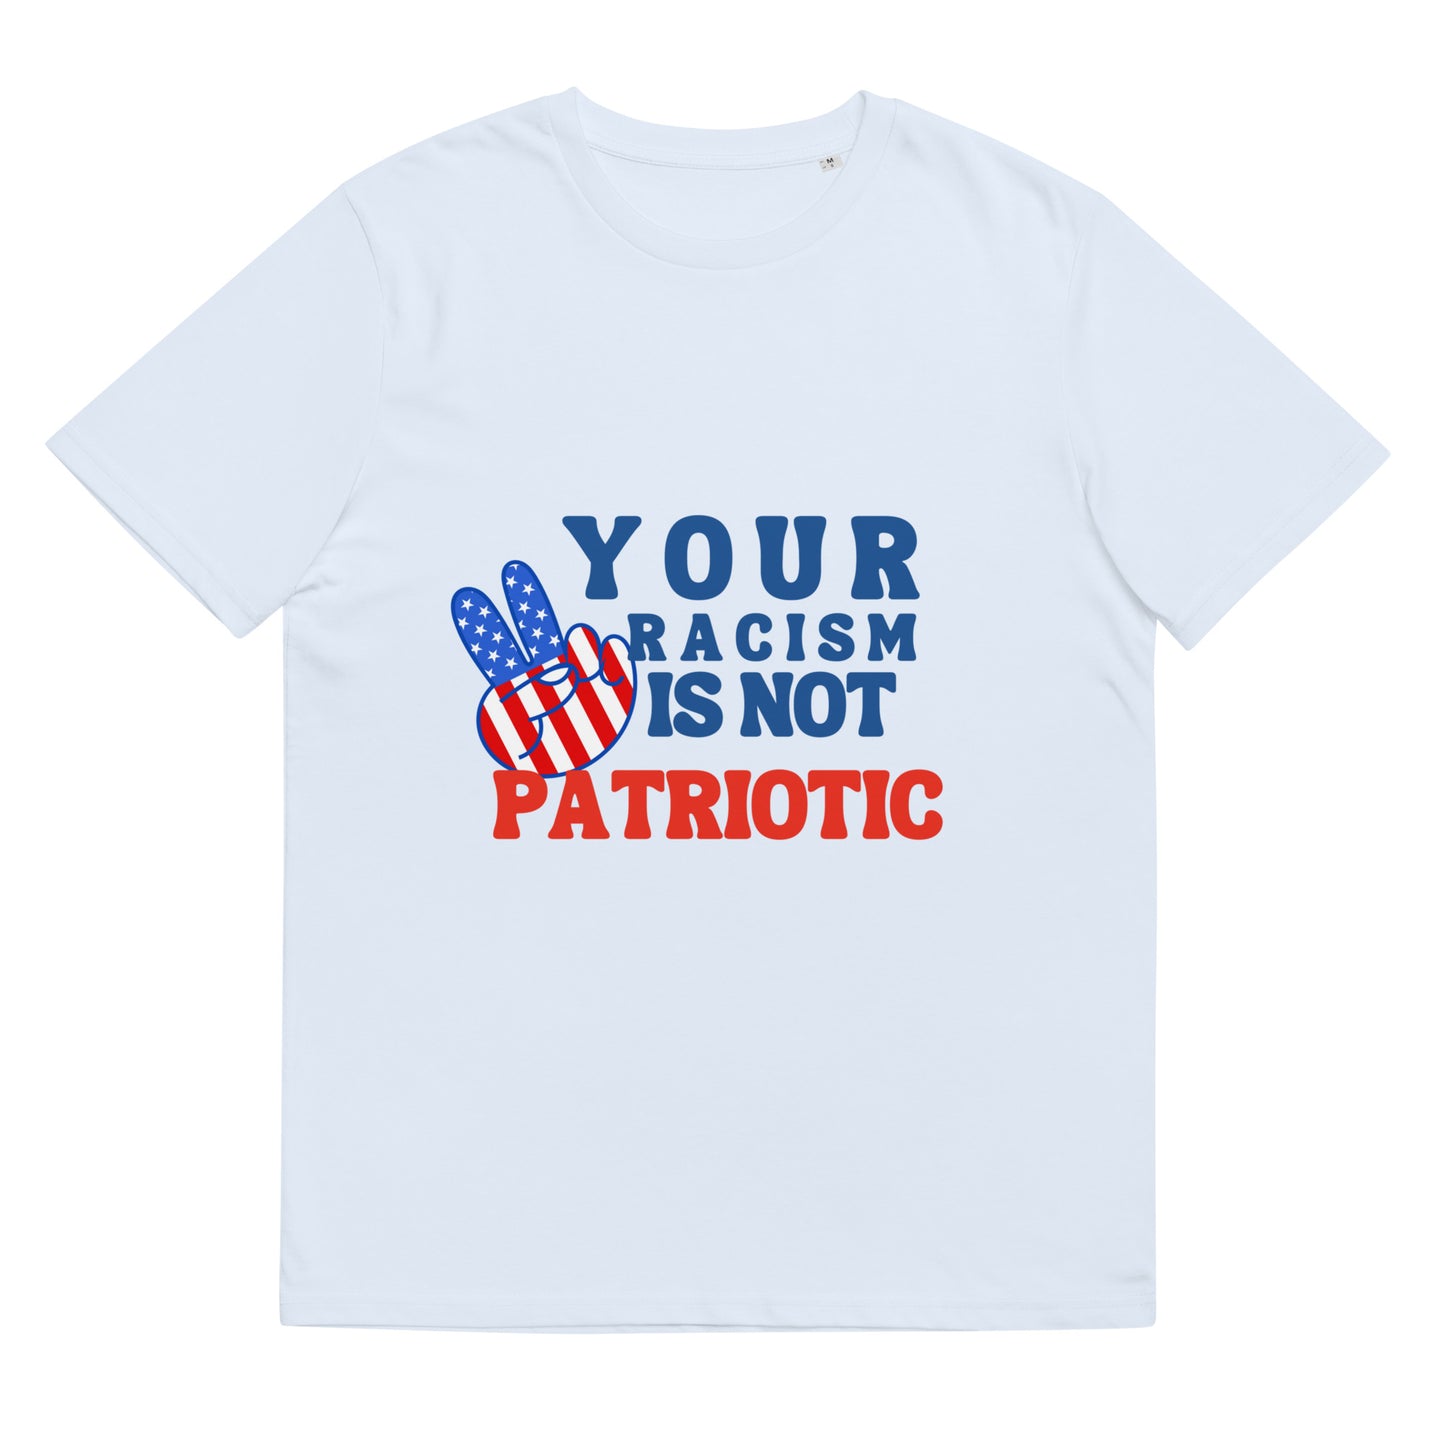 Your Racism Is Not Patriotic T-Shirt